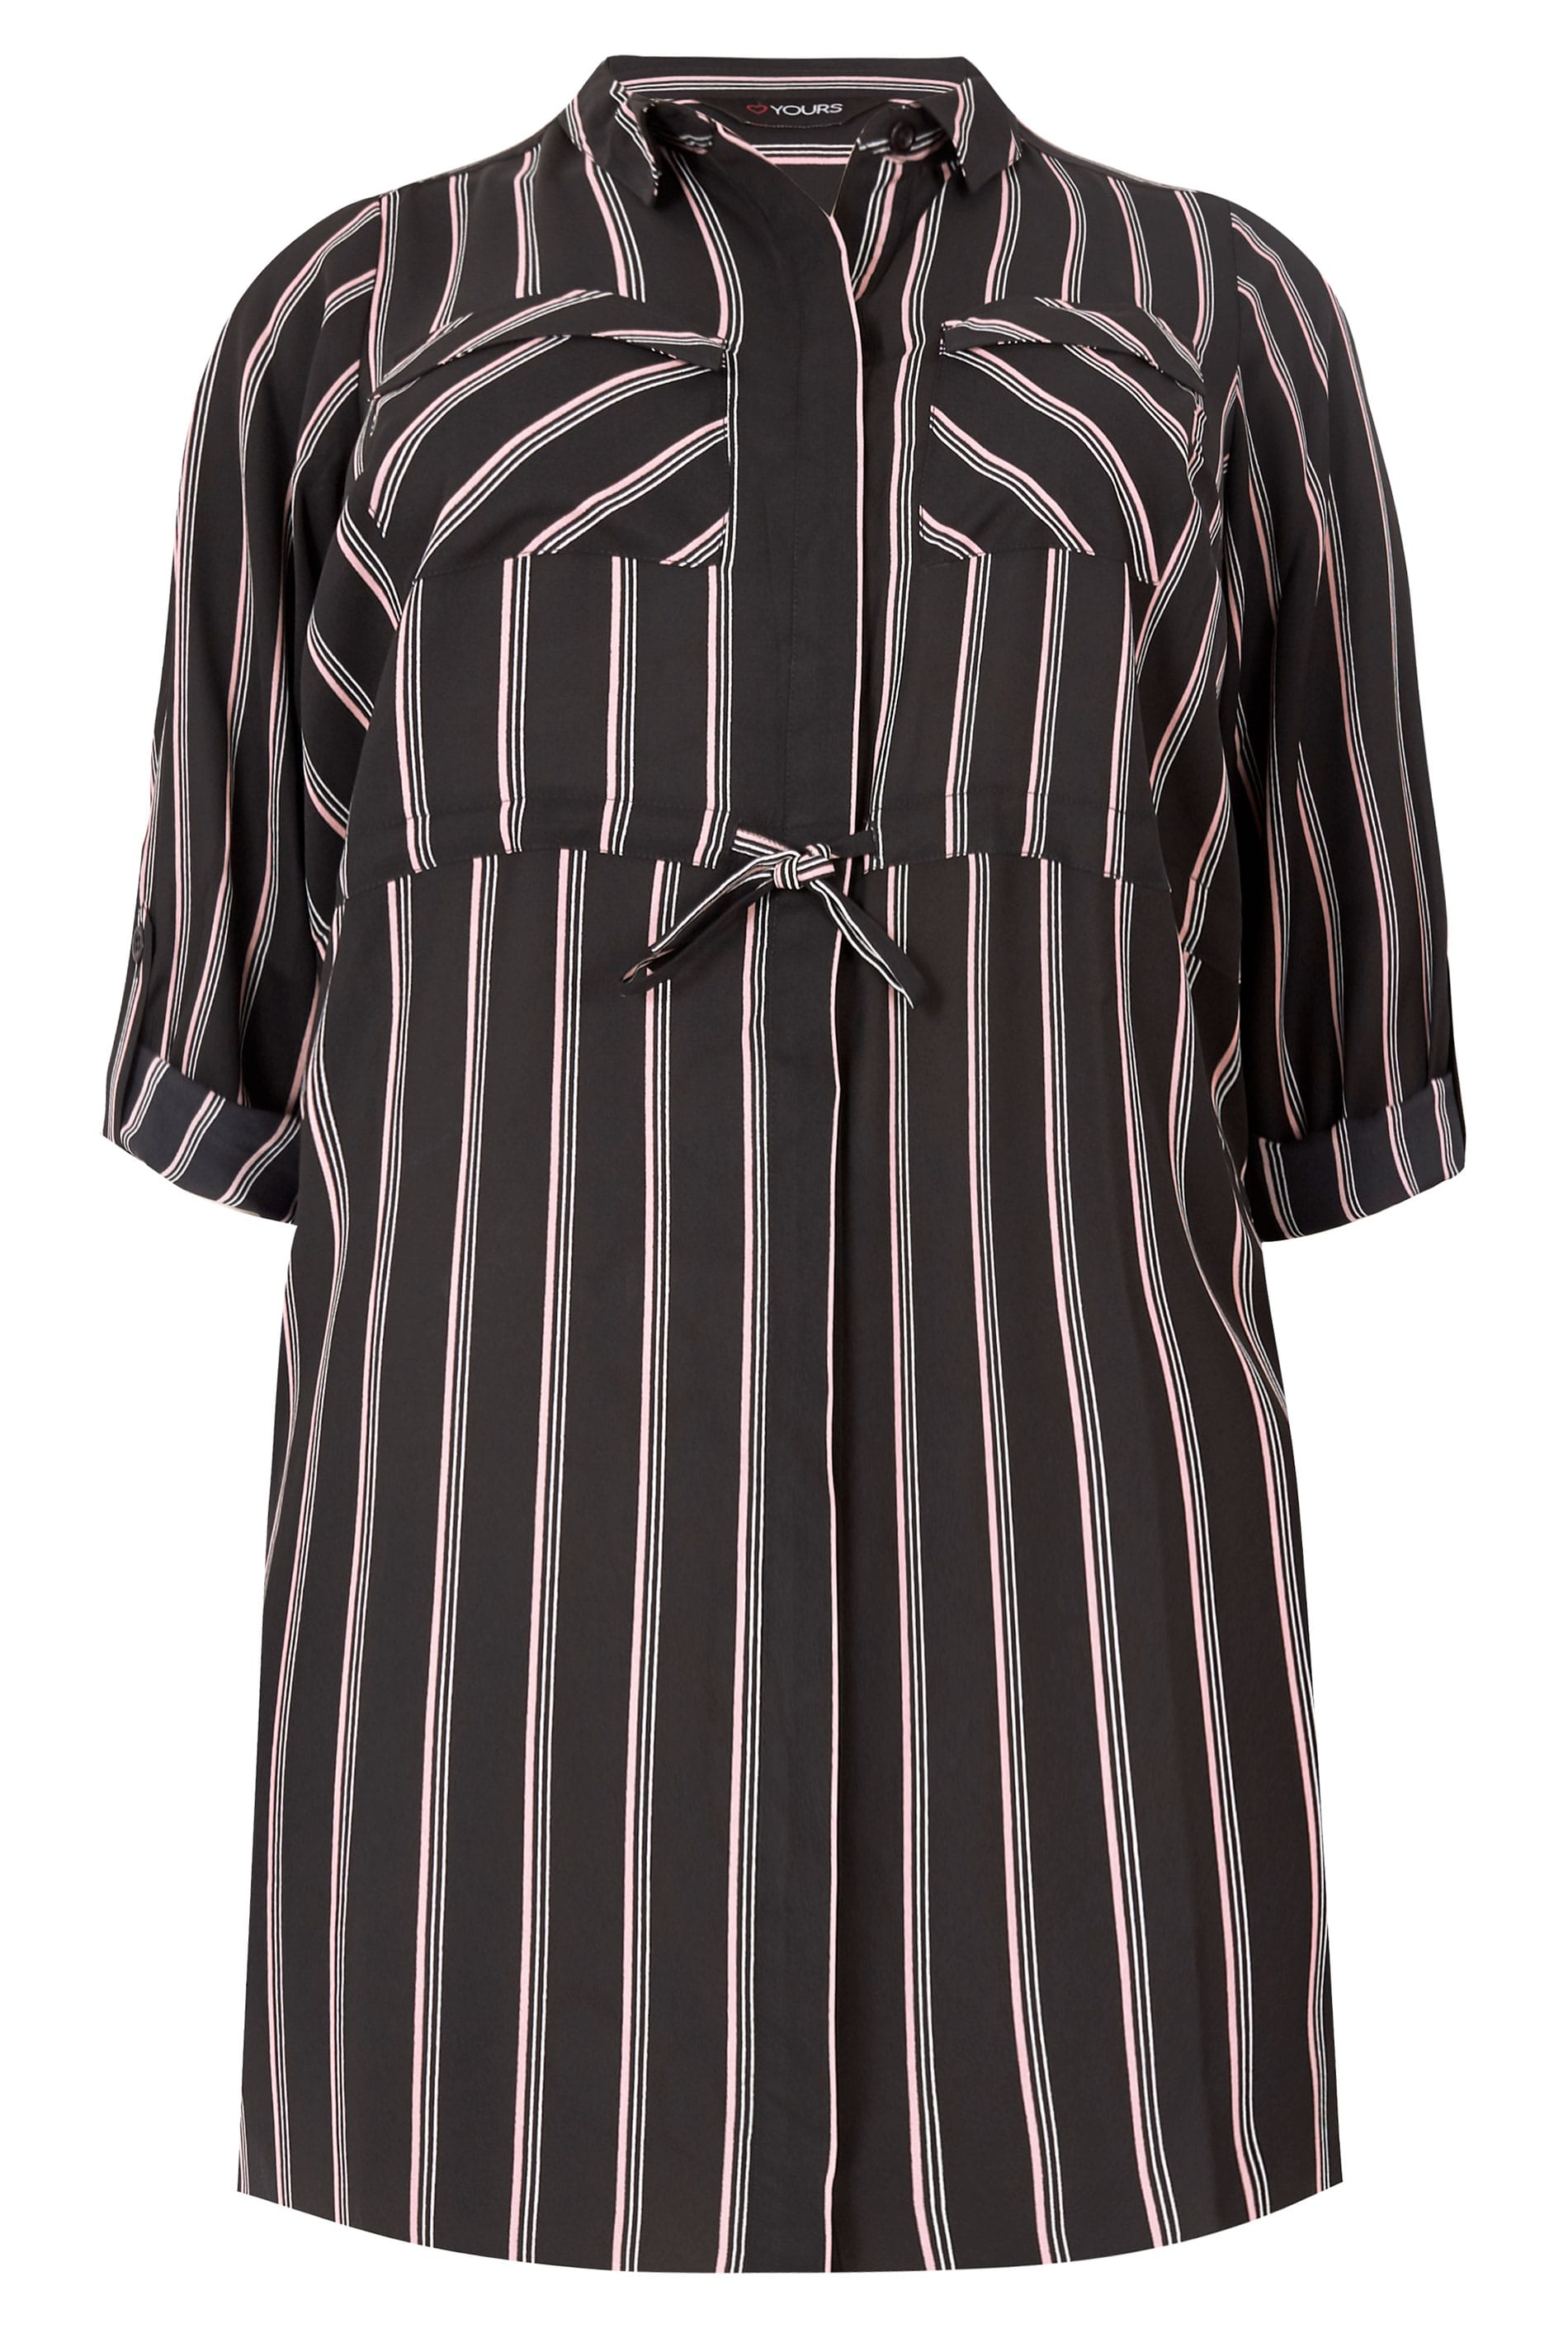 Black & Pink Striped Longline Shirt, plus size 16 to 36